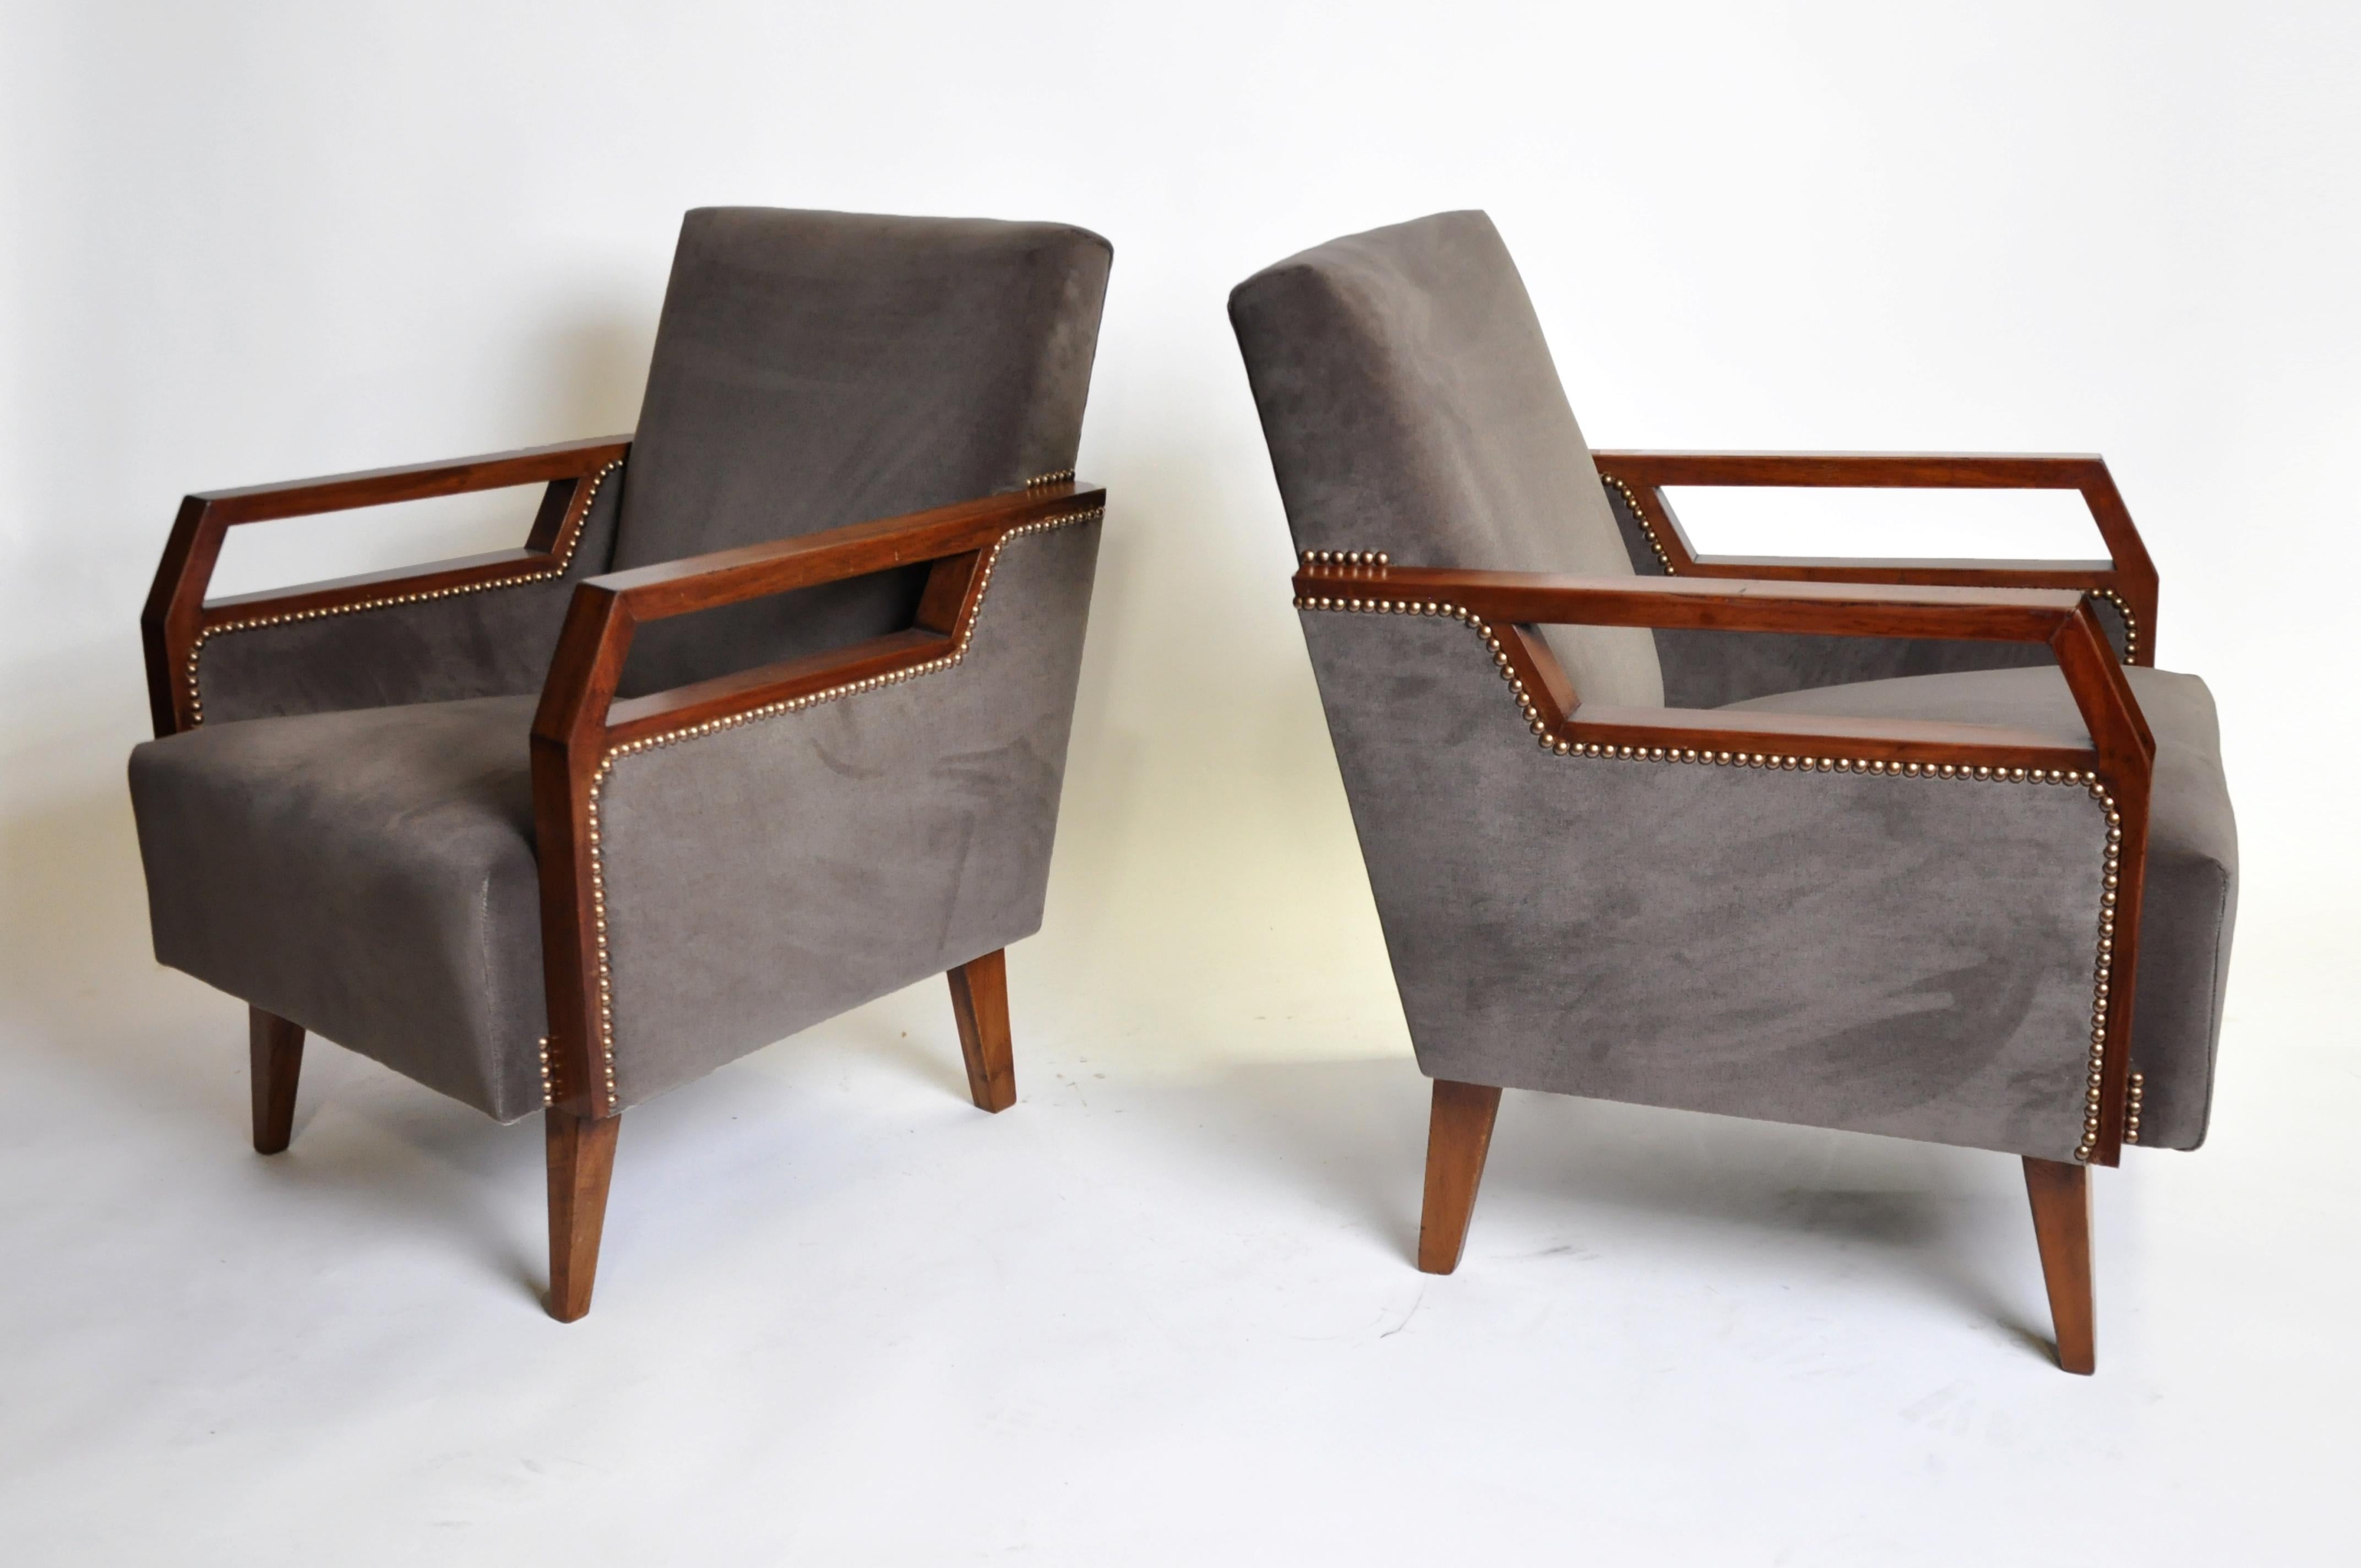 20th Century Pair of Mid-Century Modern Chairs